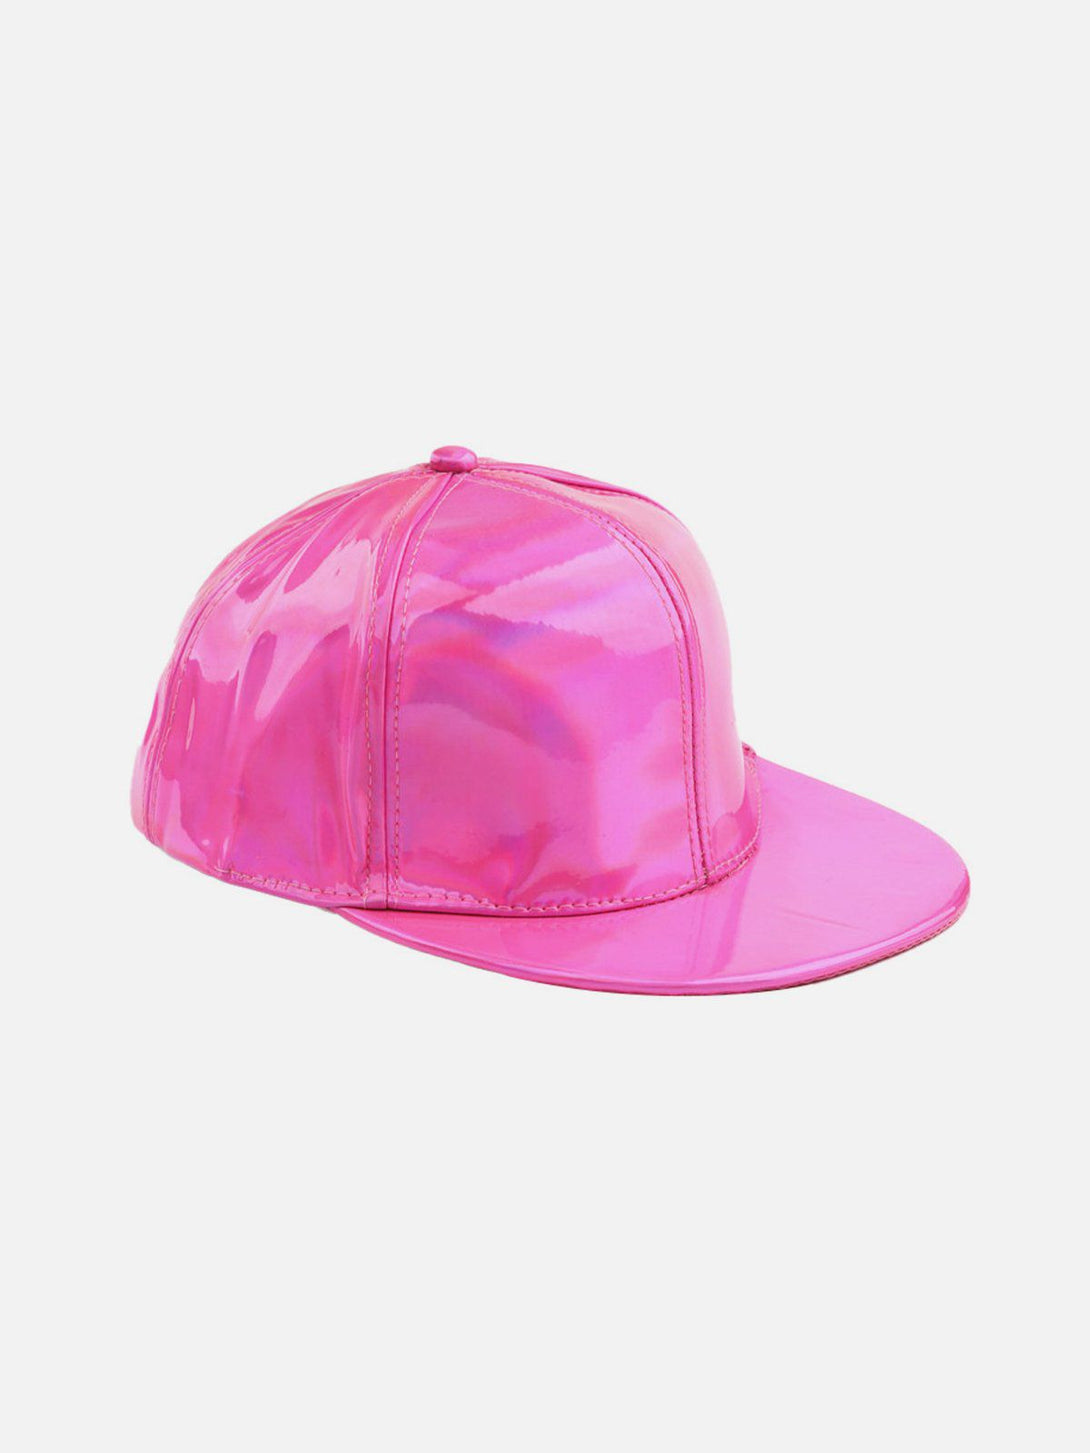 Majesda® - Laser PU Rainbow Baseball Cap- Outfit Ideas - Streetwear Fashion - majesda.com